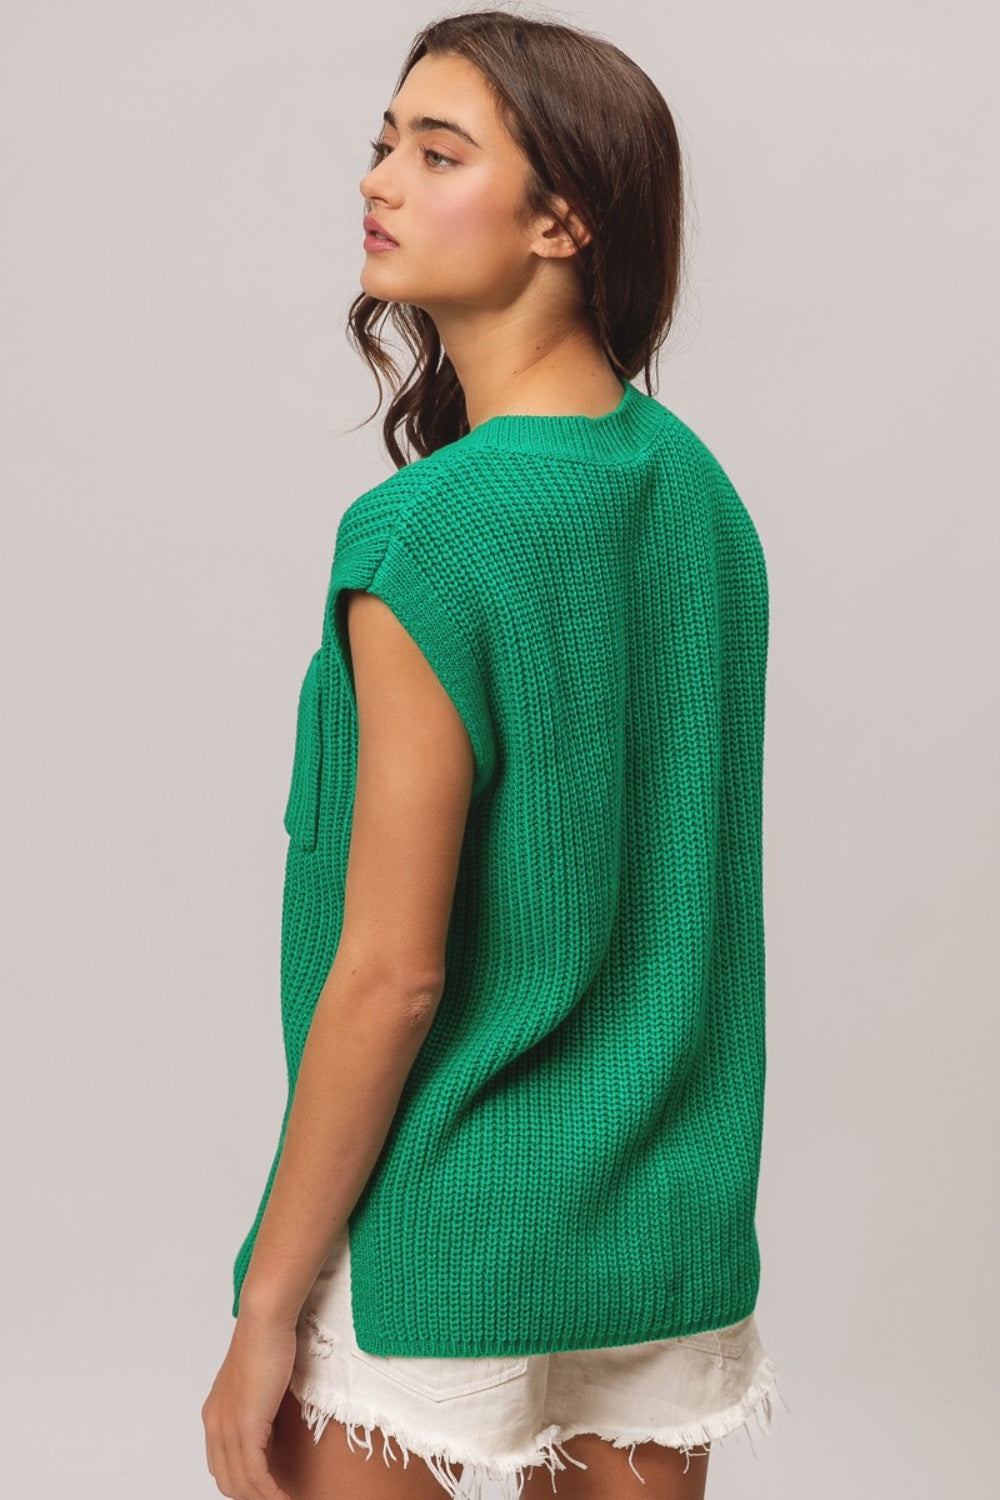 BiBi Patch Pocket Cap Sleeve Sweater Top - Tigbul's Variety Fashion Shop